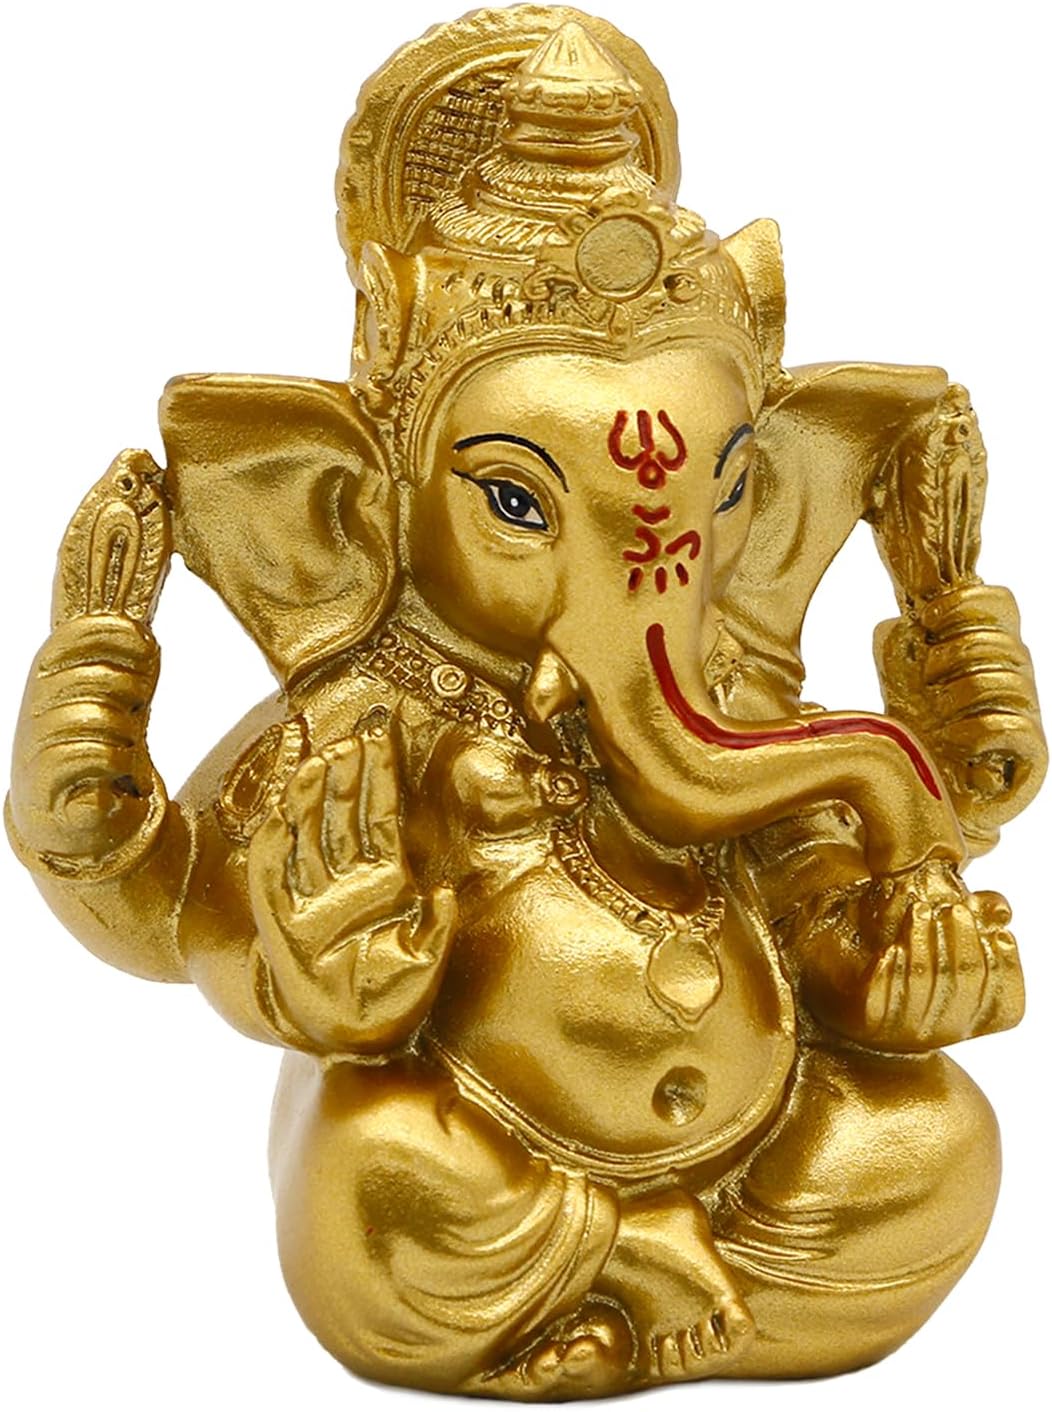 Indian God Lord Ganesh Statue - Hindu God Golden Ganesha Idol Figurines for Car Dashboard Decor Hindu Gift Indian India Home Temple Mandir Pooja Item Diwali Gifts Room Altar Decor